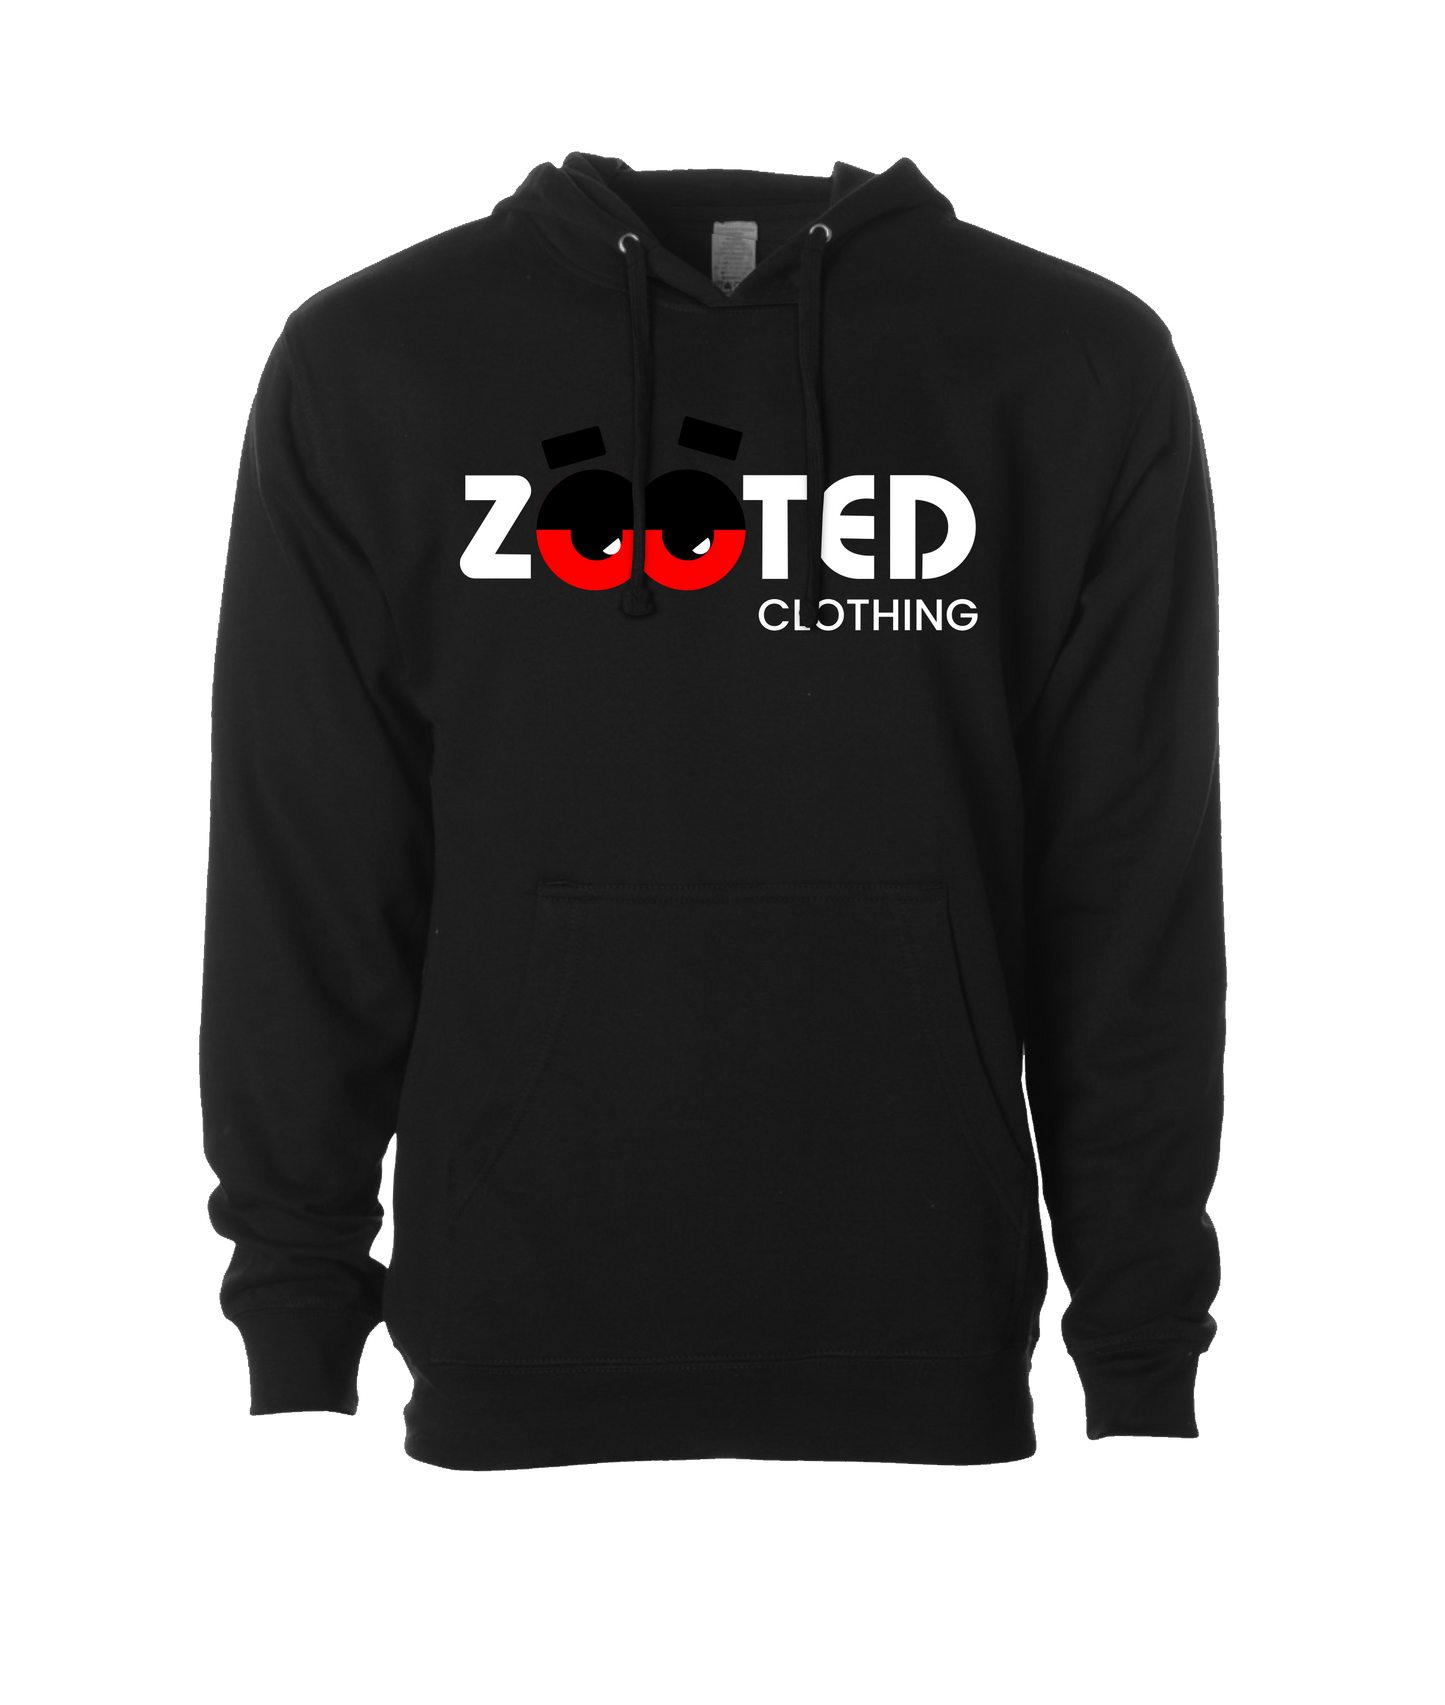 Zooted Clothing - ZC - Black Hoodie